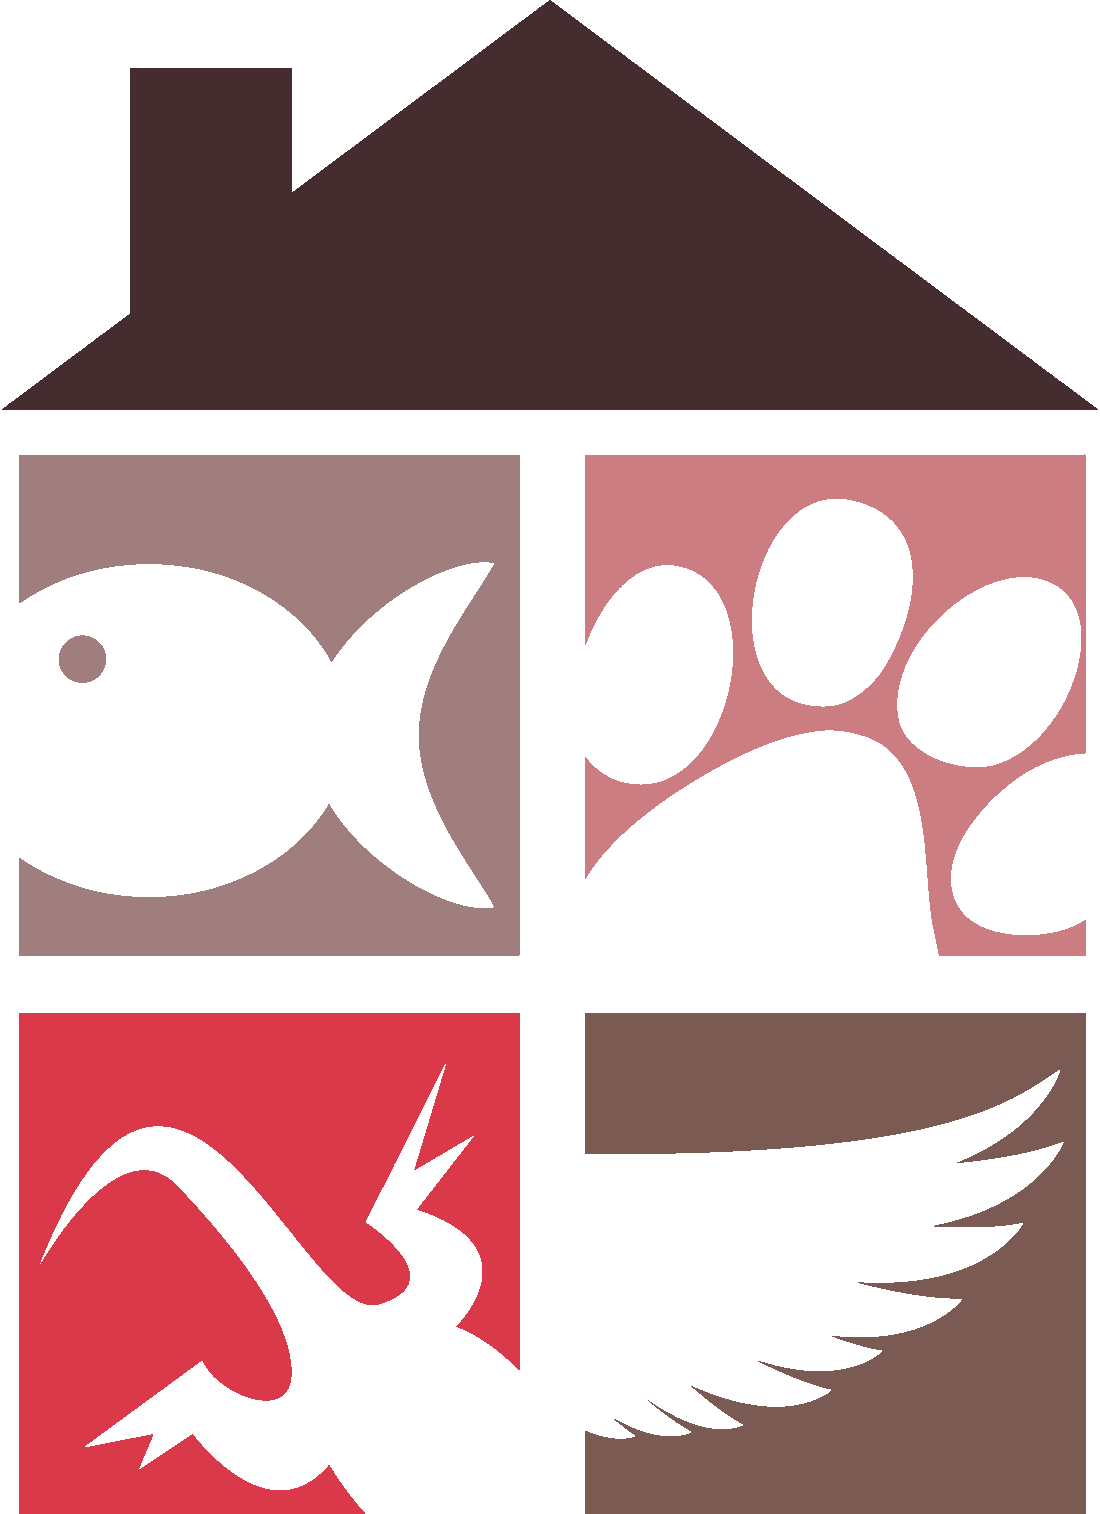 Coloured We Love Pets logo icon